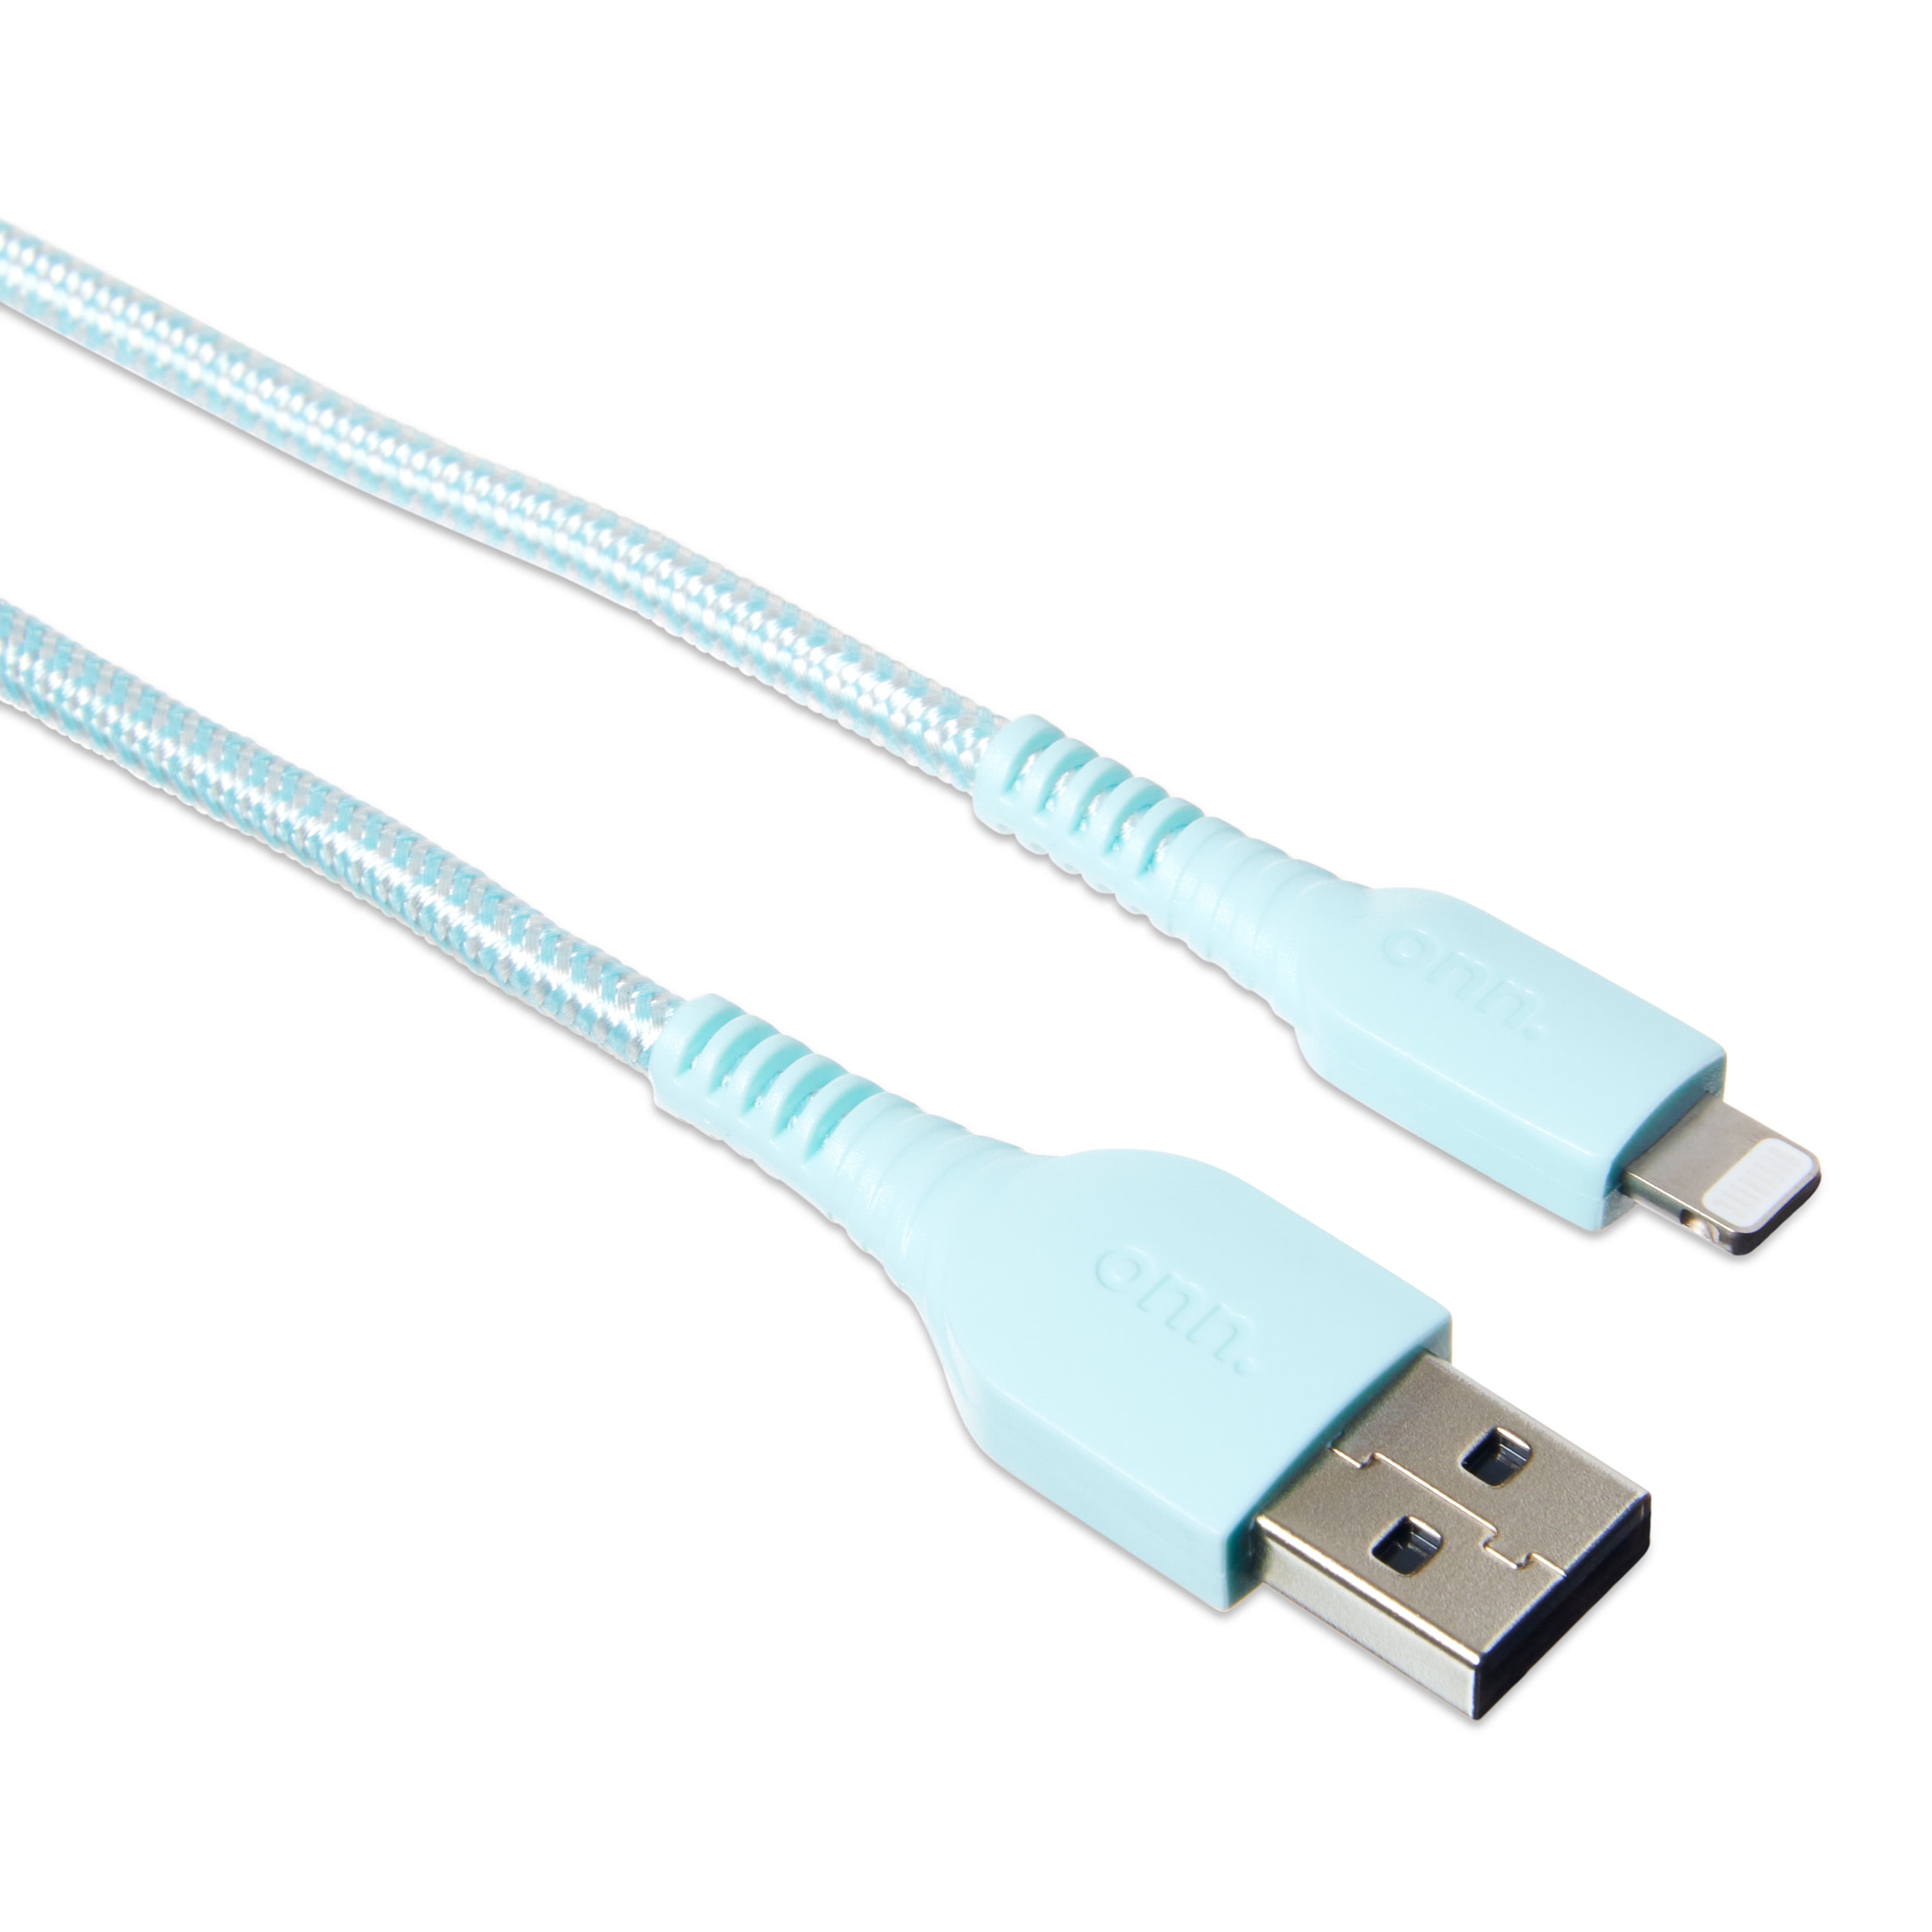 onn. Lightning to USB Cable, Aqua Chevron, 6'